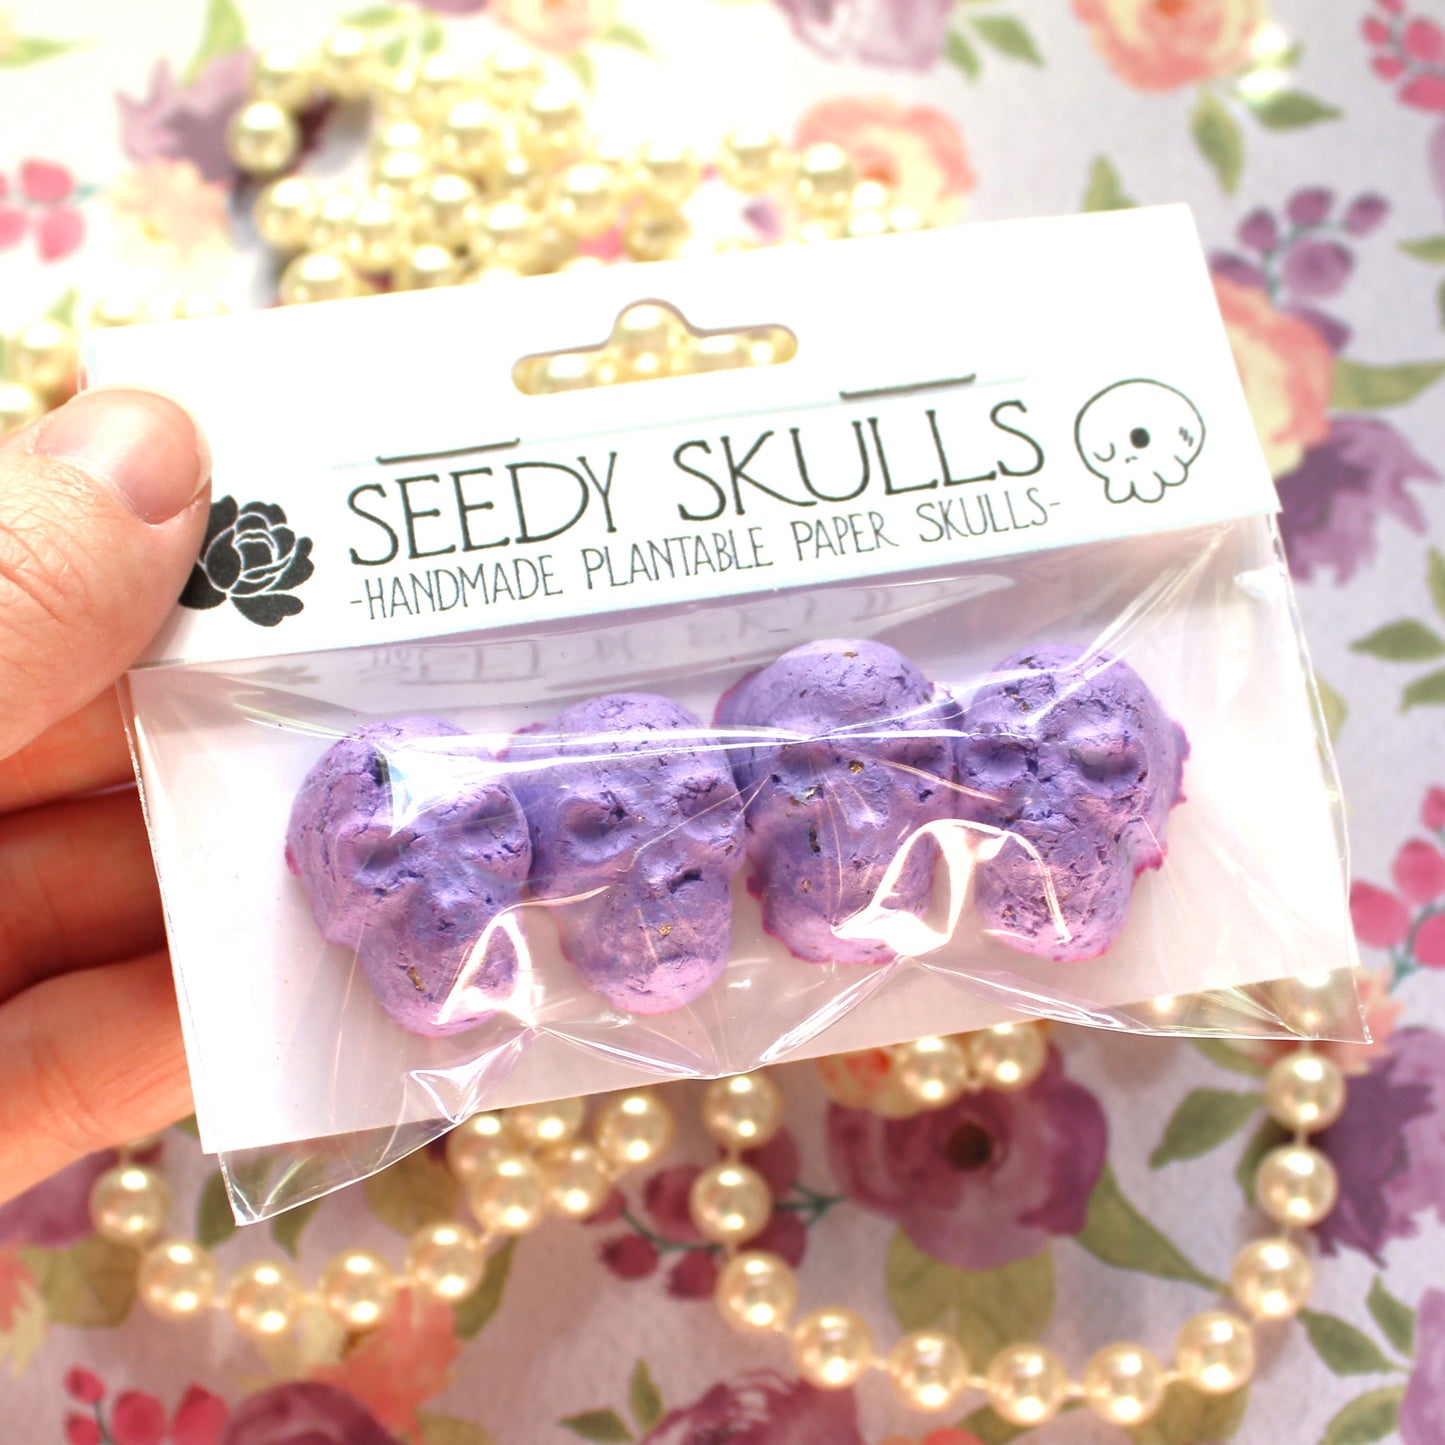 Purple Plantable Paper Skulls / Seed Bombs / Seedy Skulls Pack / Garden Plants / Spring Summer Gift / Pastel Goth Wedding Flowers